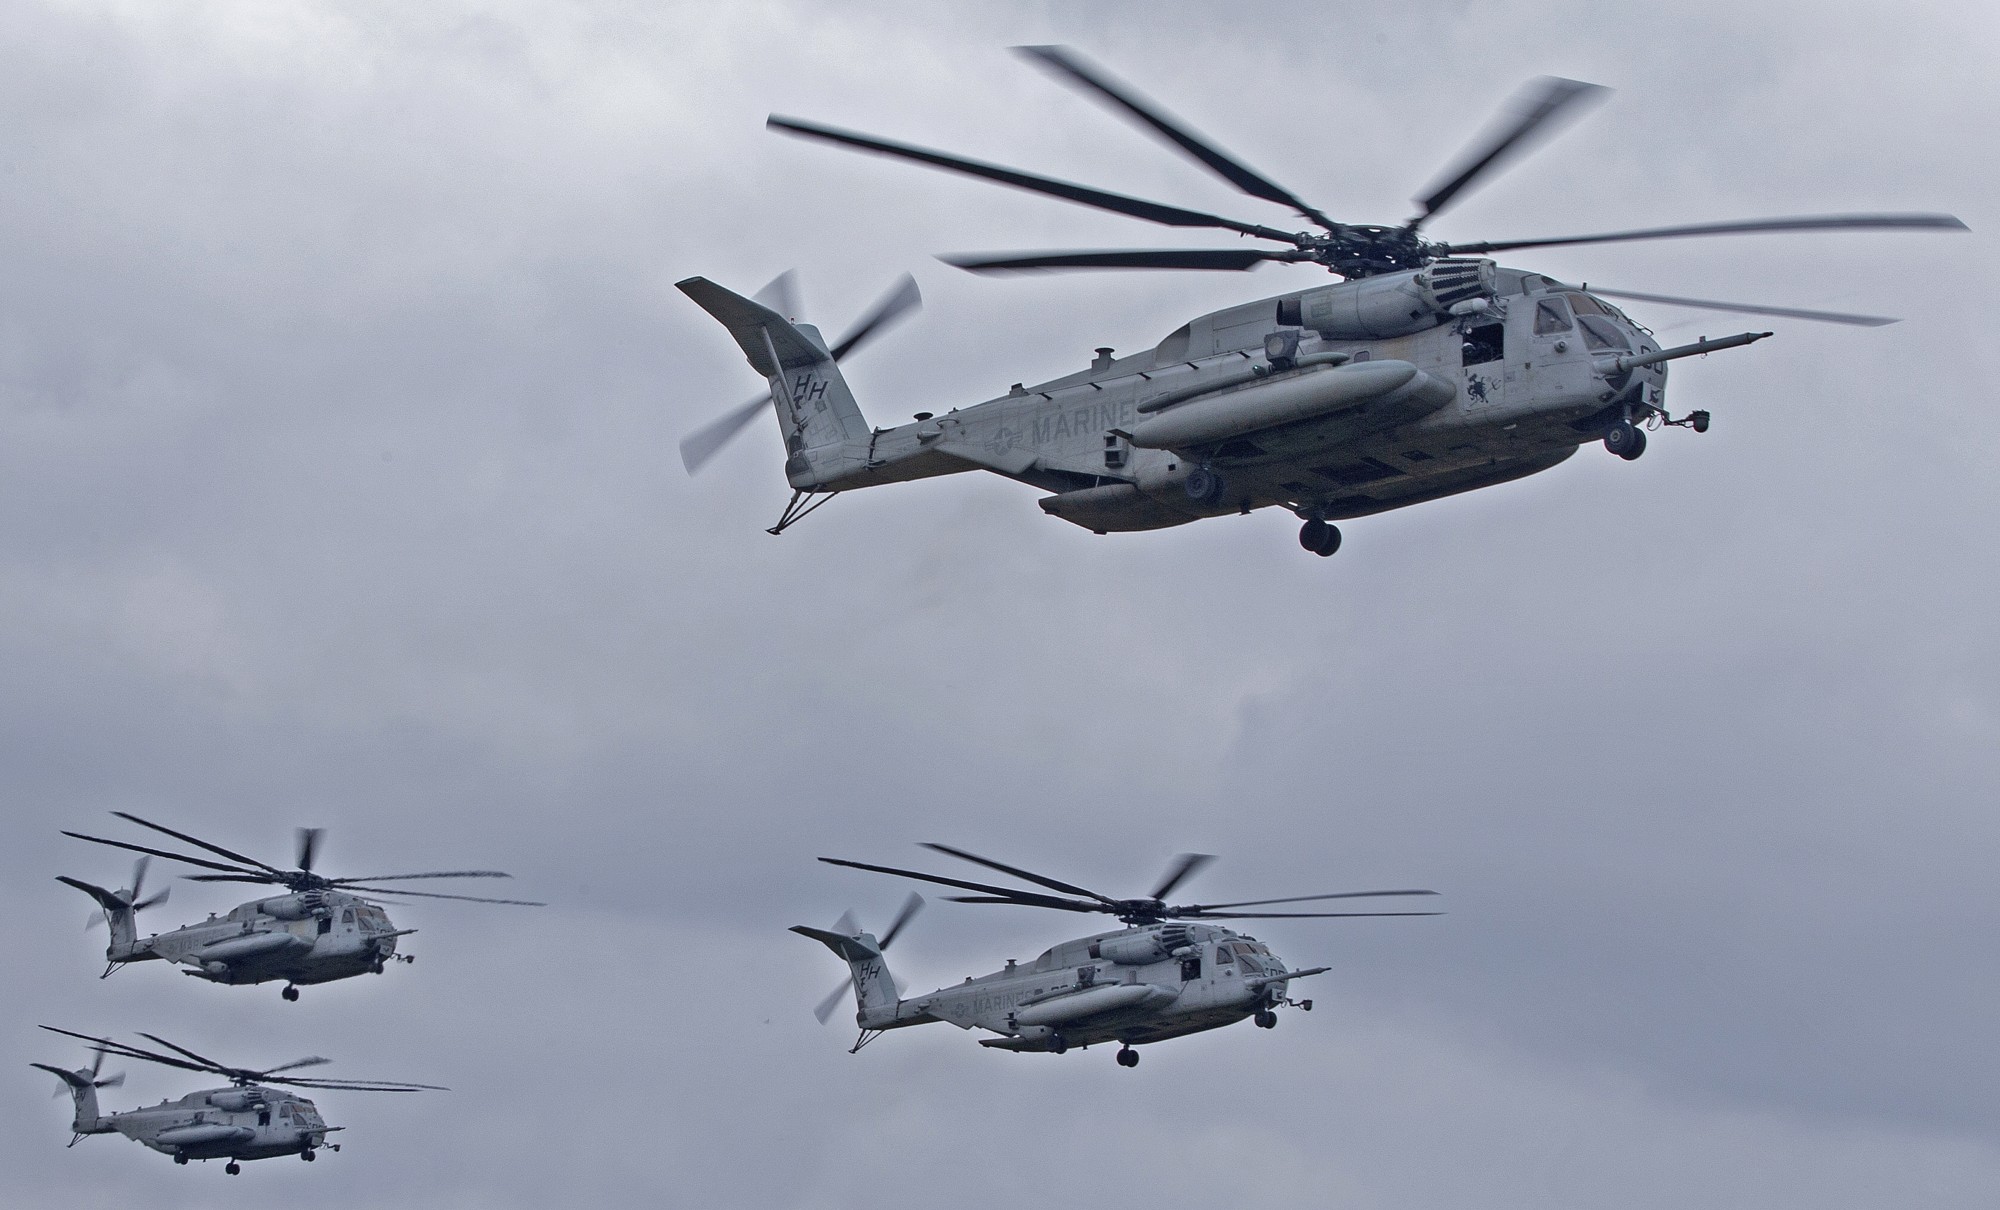 hmh-366 hammerheads marine heavy helicopter squadron usmc sikorsky ch-53e super stallion 92